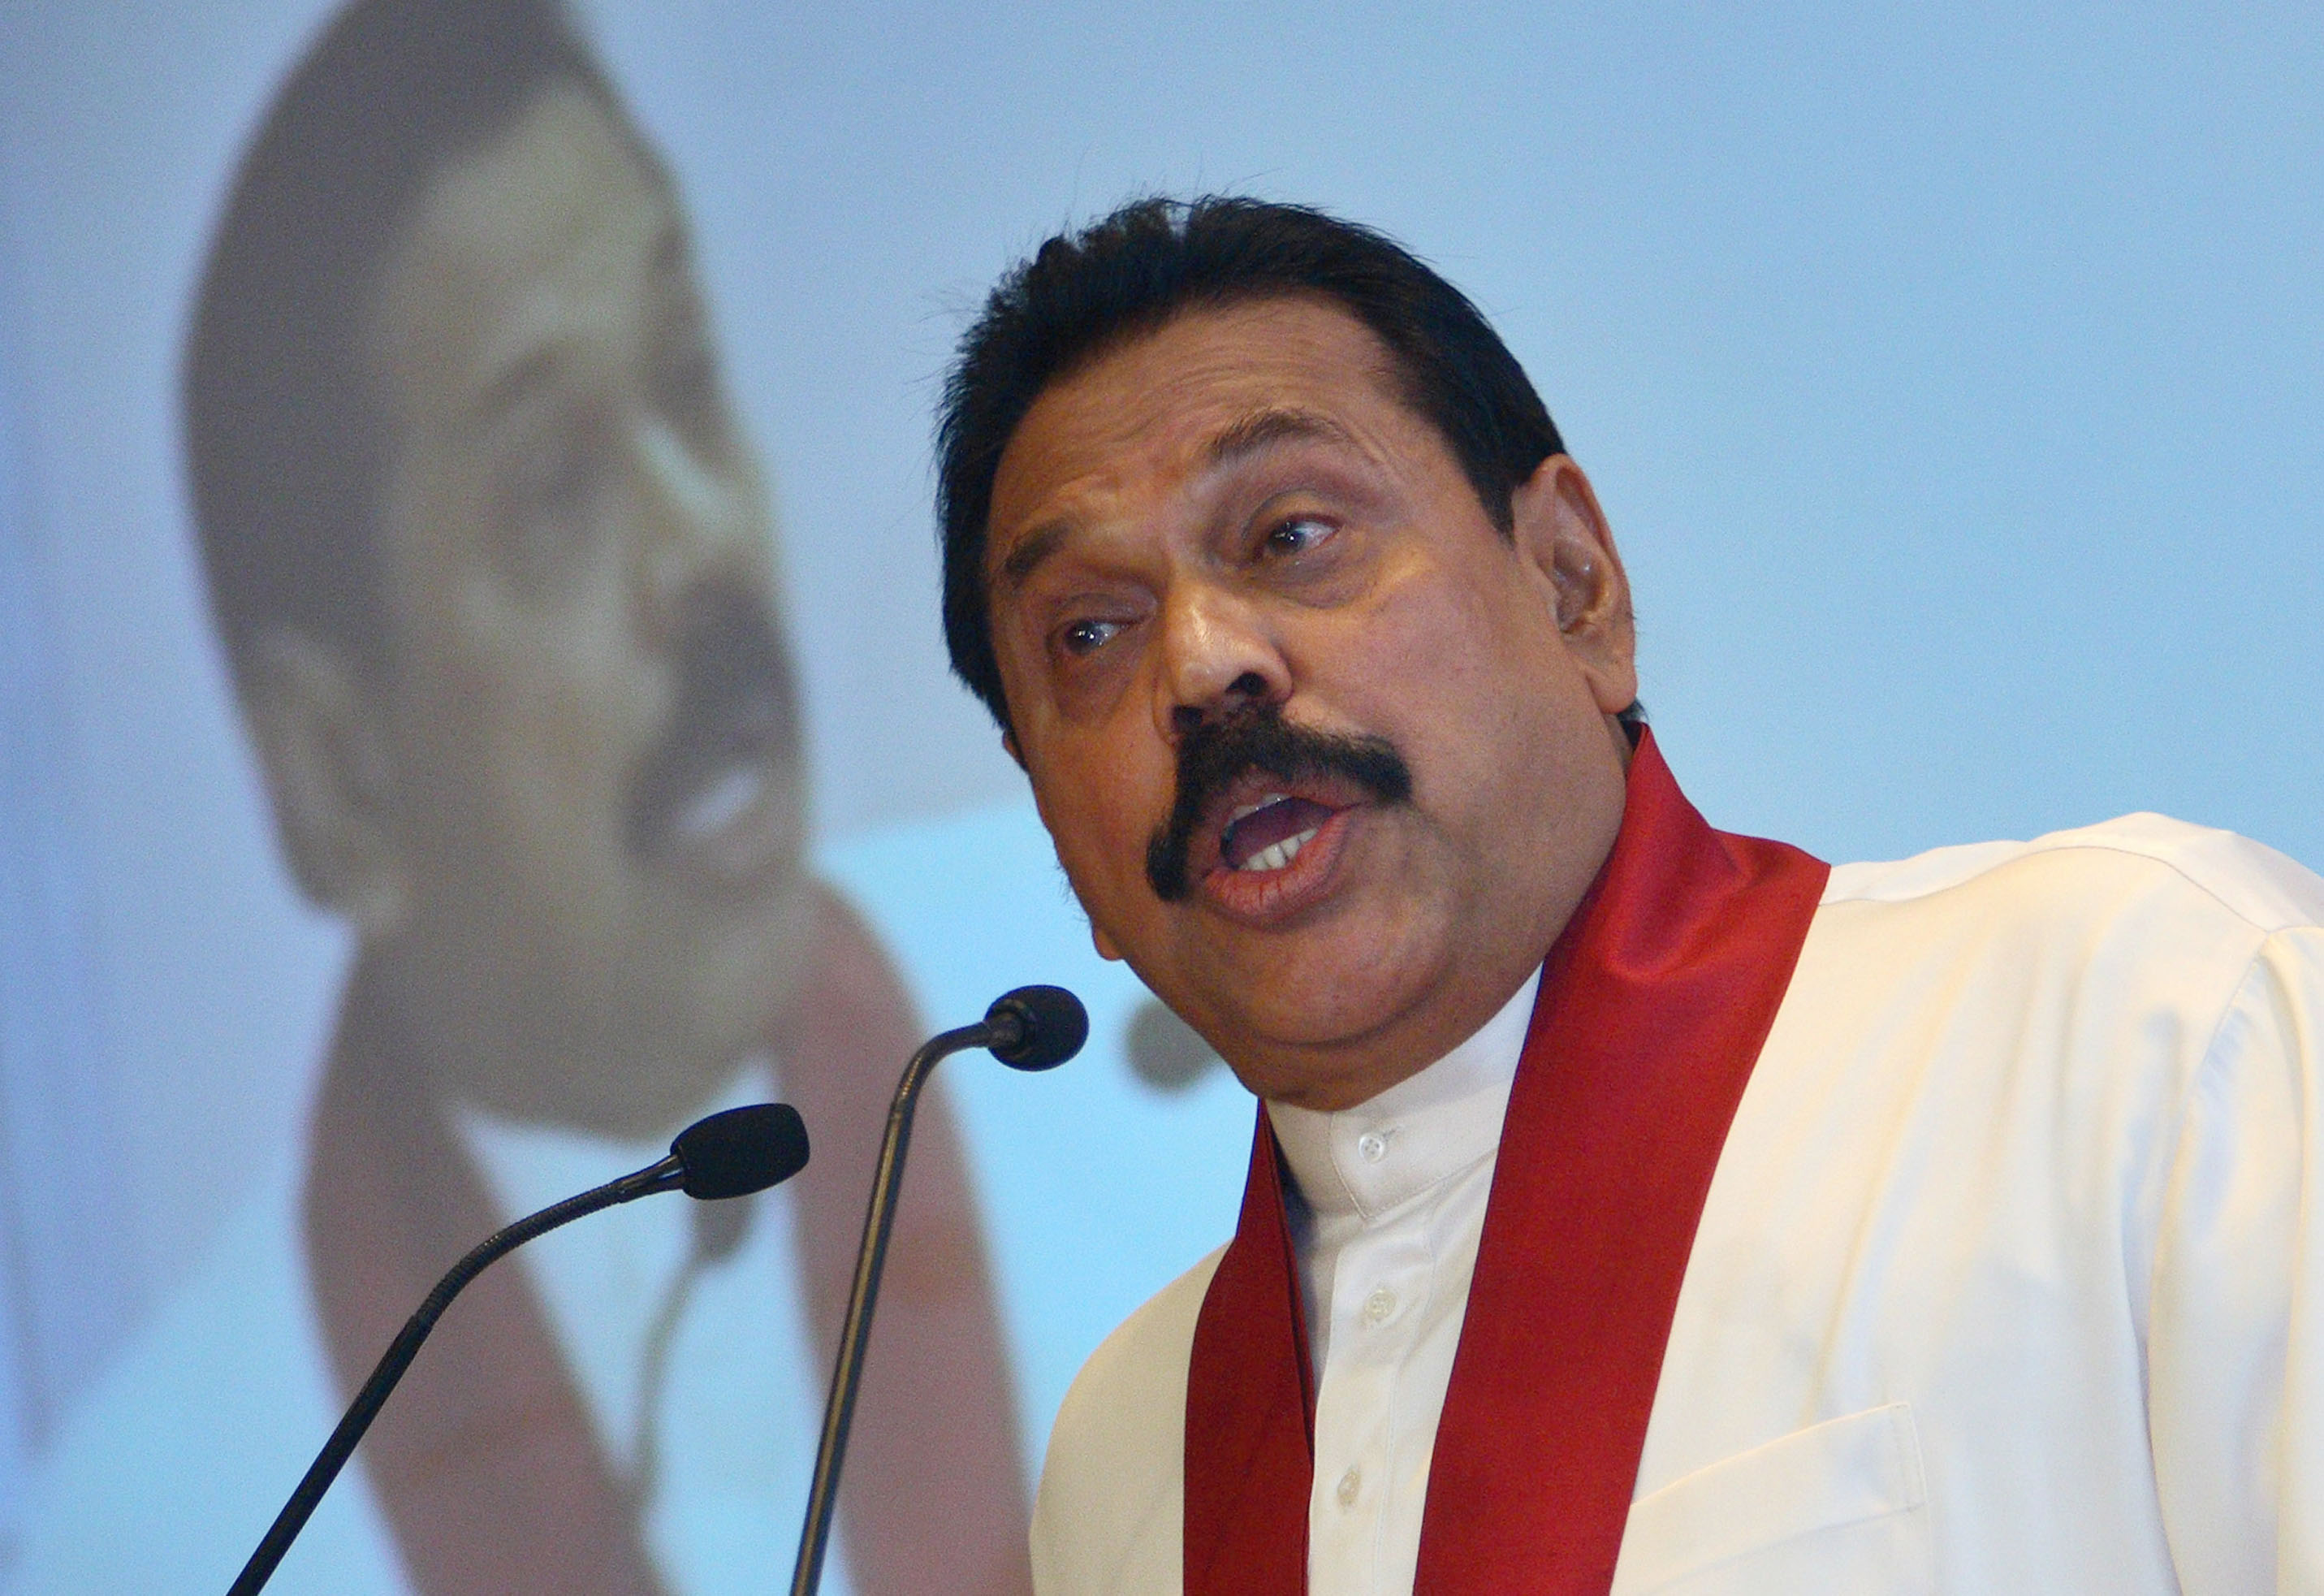 'More avuncular than ogre': Sri Lankan President Mahinda Rajapaksa speaks during the Hindustan Times Leadership Summit in New Delhi in October 2007 | BLOOMBERG